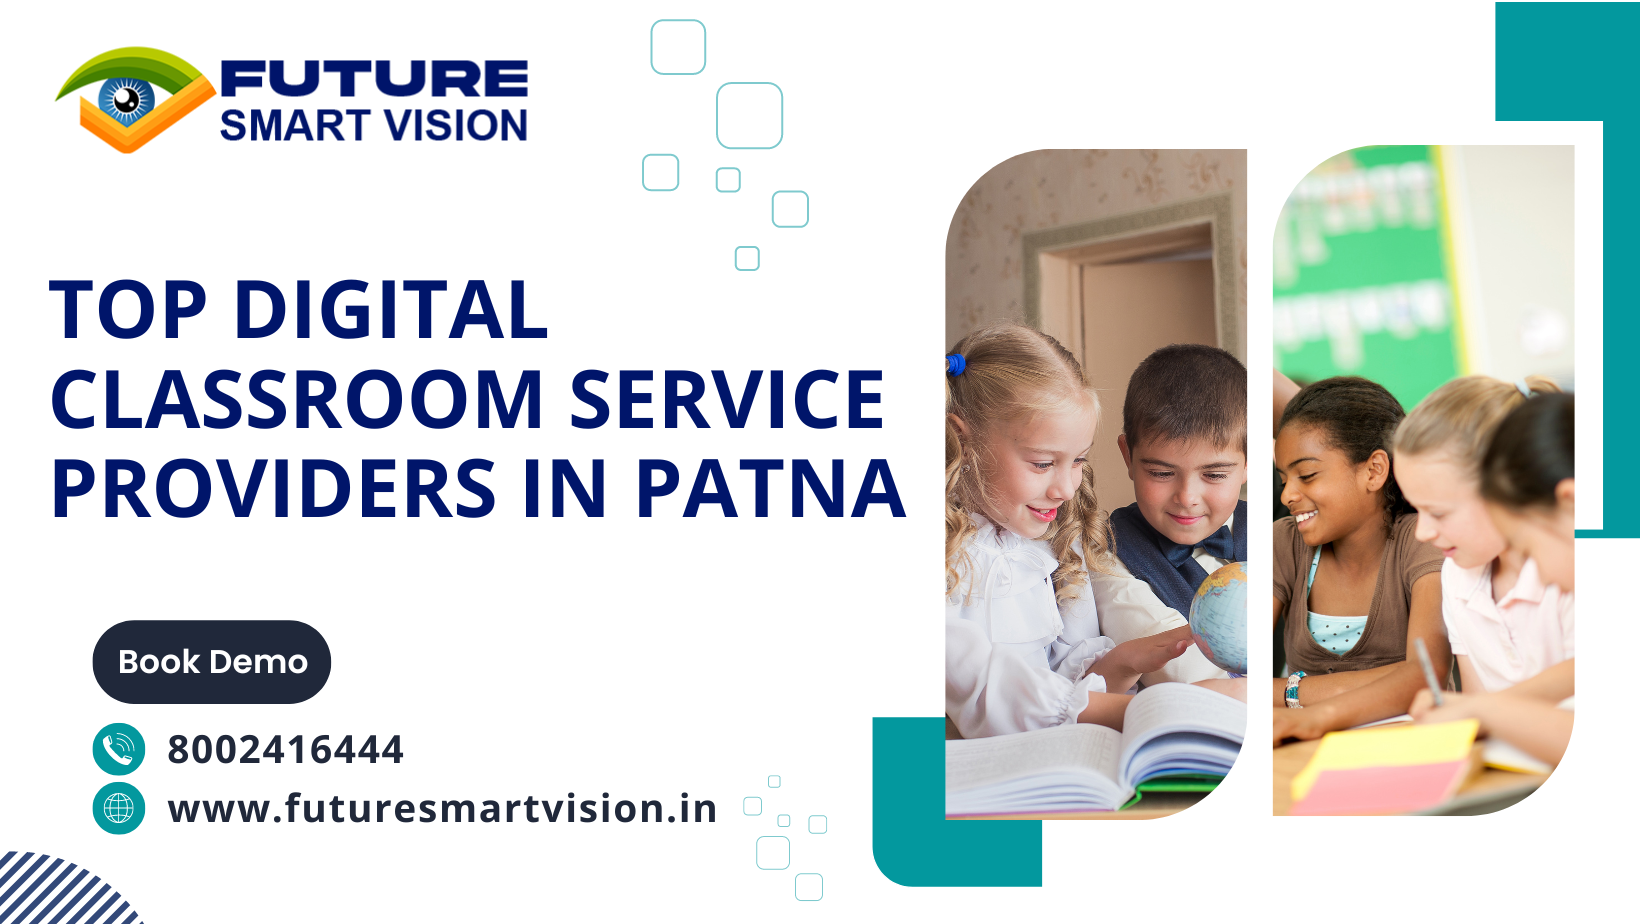 Top Digital Classroom Service Providers in Patna: Future Smart Vision